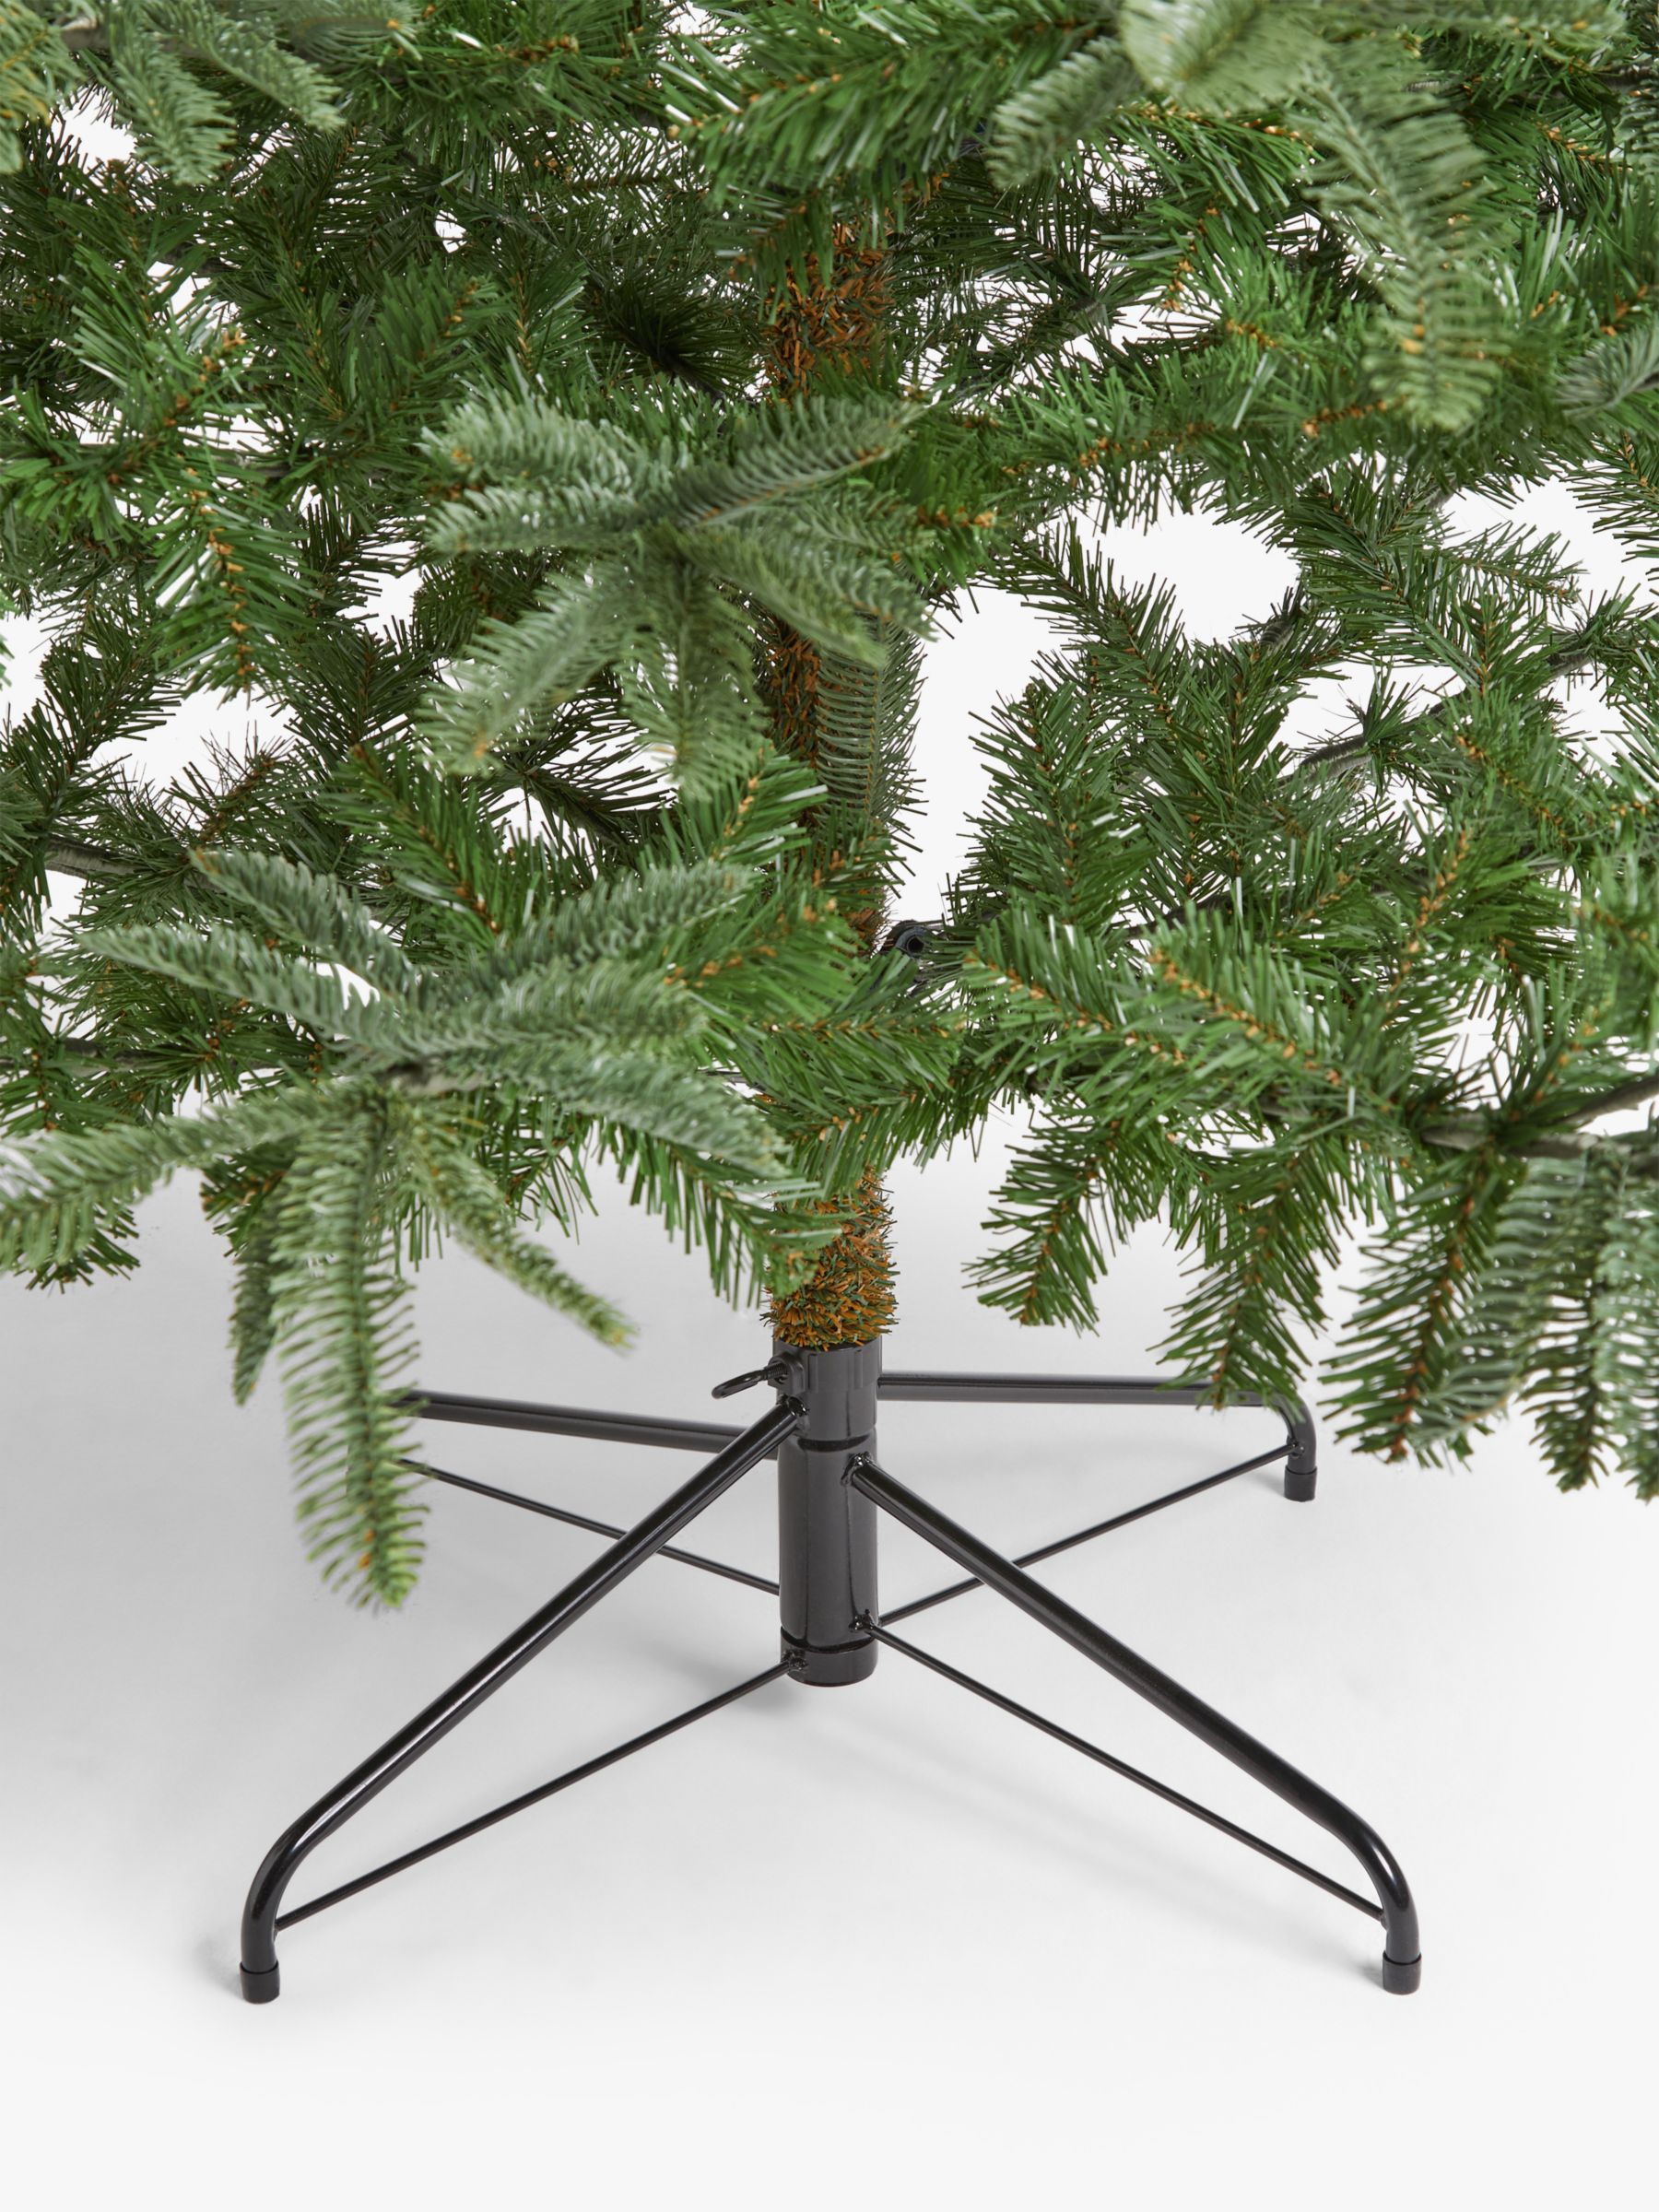 John Lewis Oslo Pine Unlit Christmas Tree, 7ft